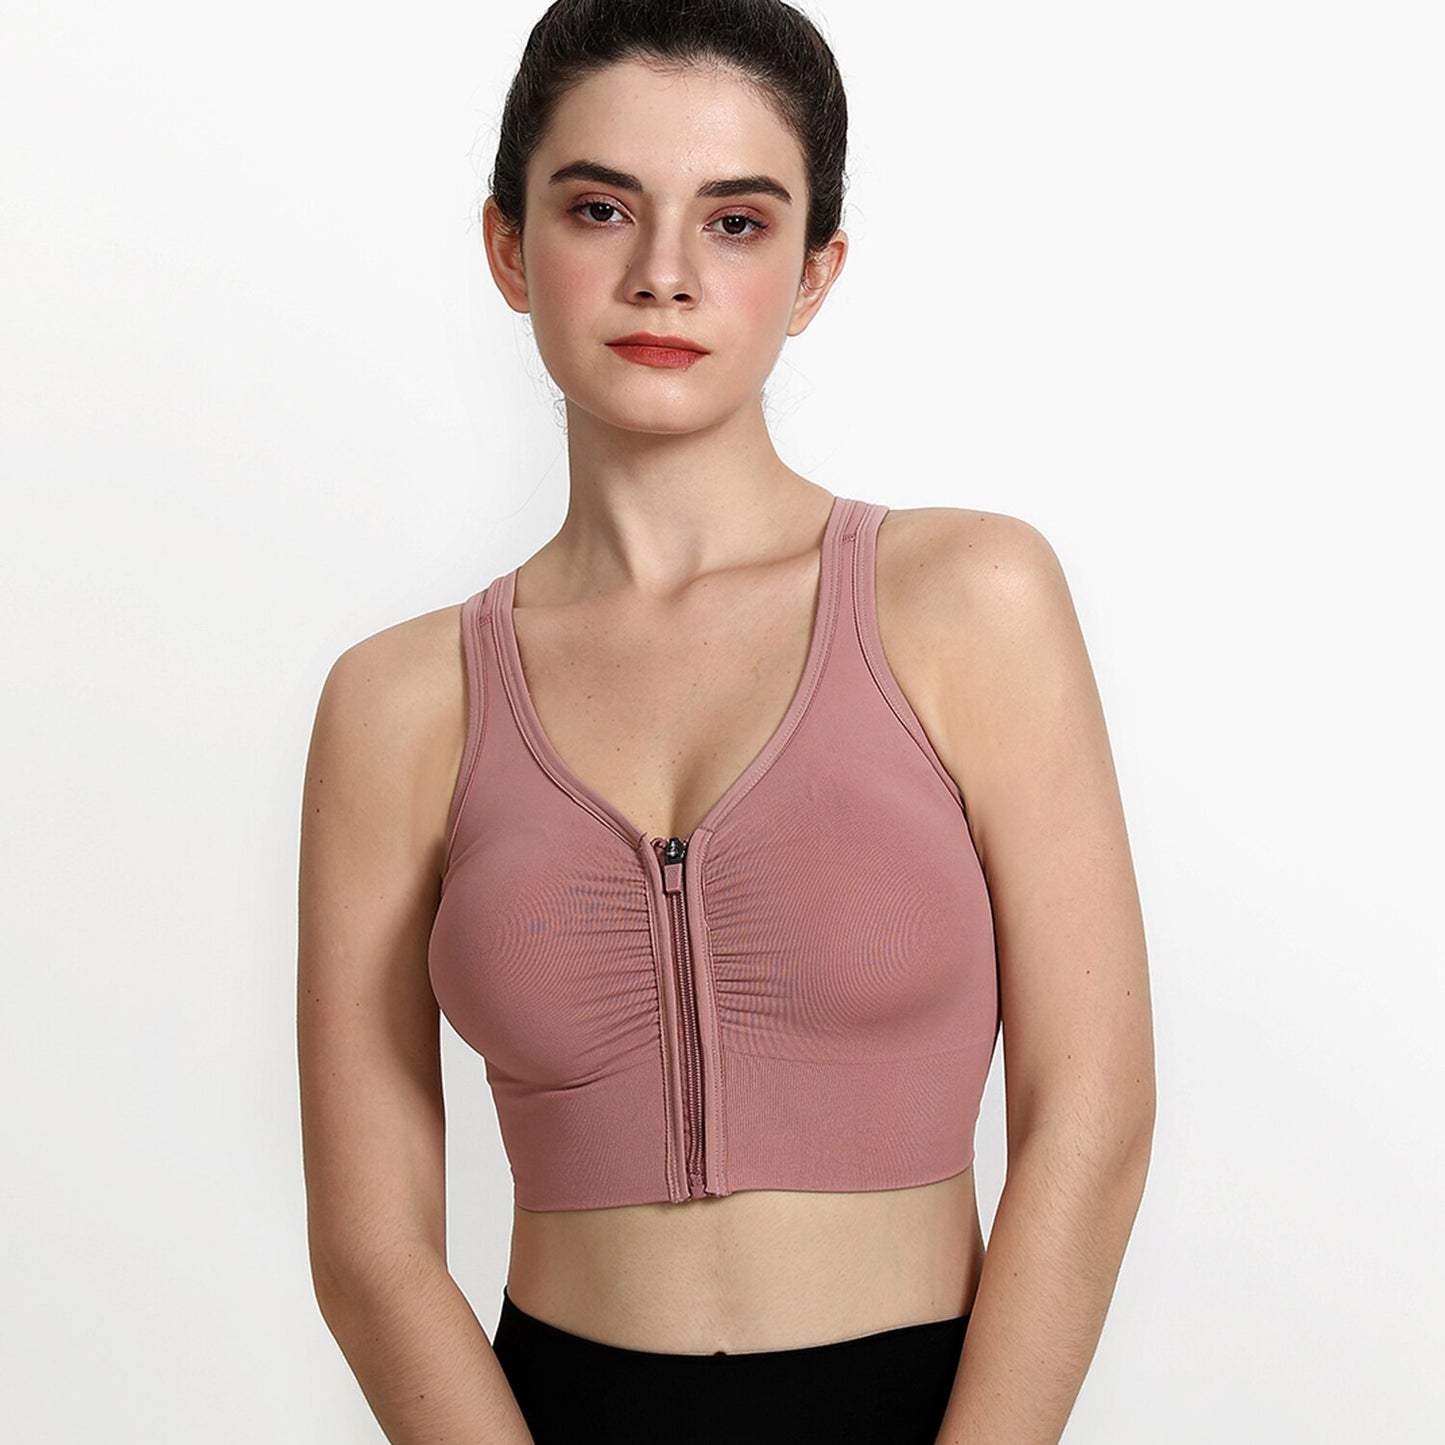 F.DYRAA Front Zipper Sports Bra Women Underwear Push Up Yoga Crop Top Bras Solid Athletic Vest Gym Fitness Shirt Sportswear